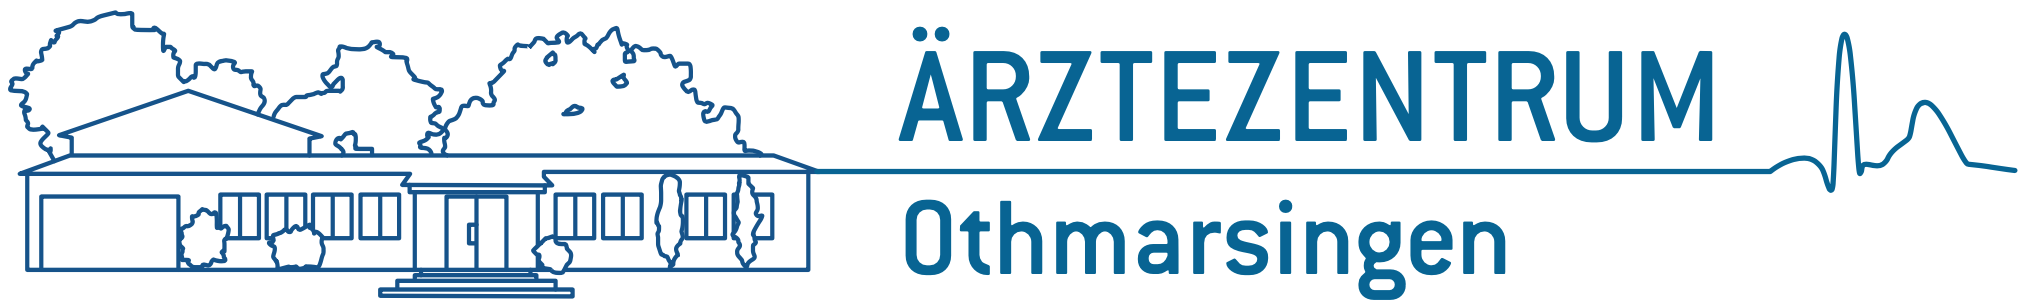 Aerztezentrum Othmarsingen Logo